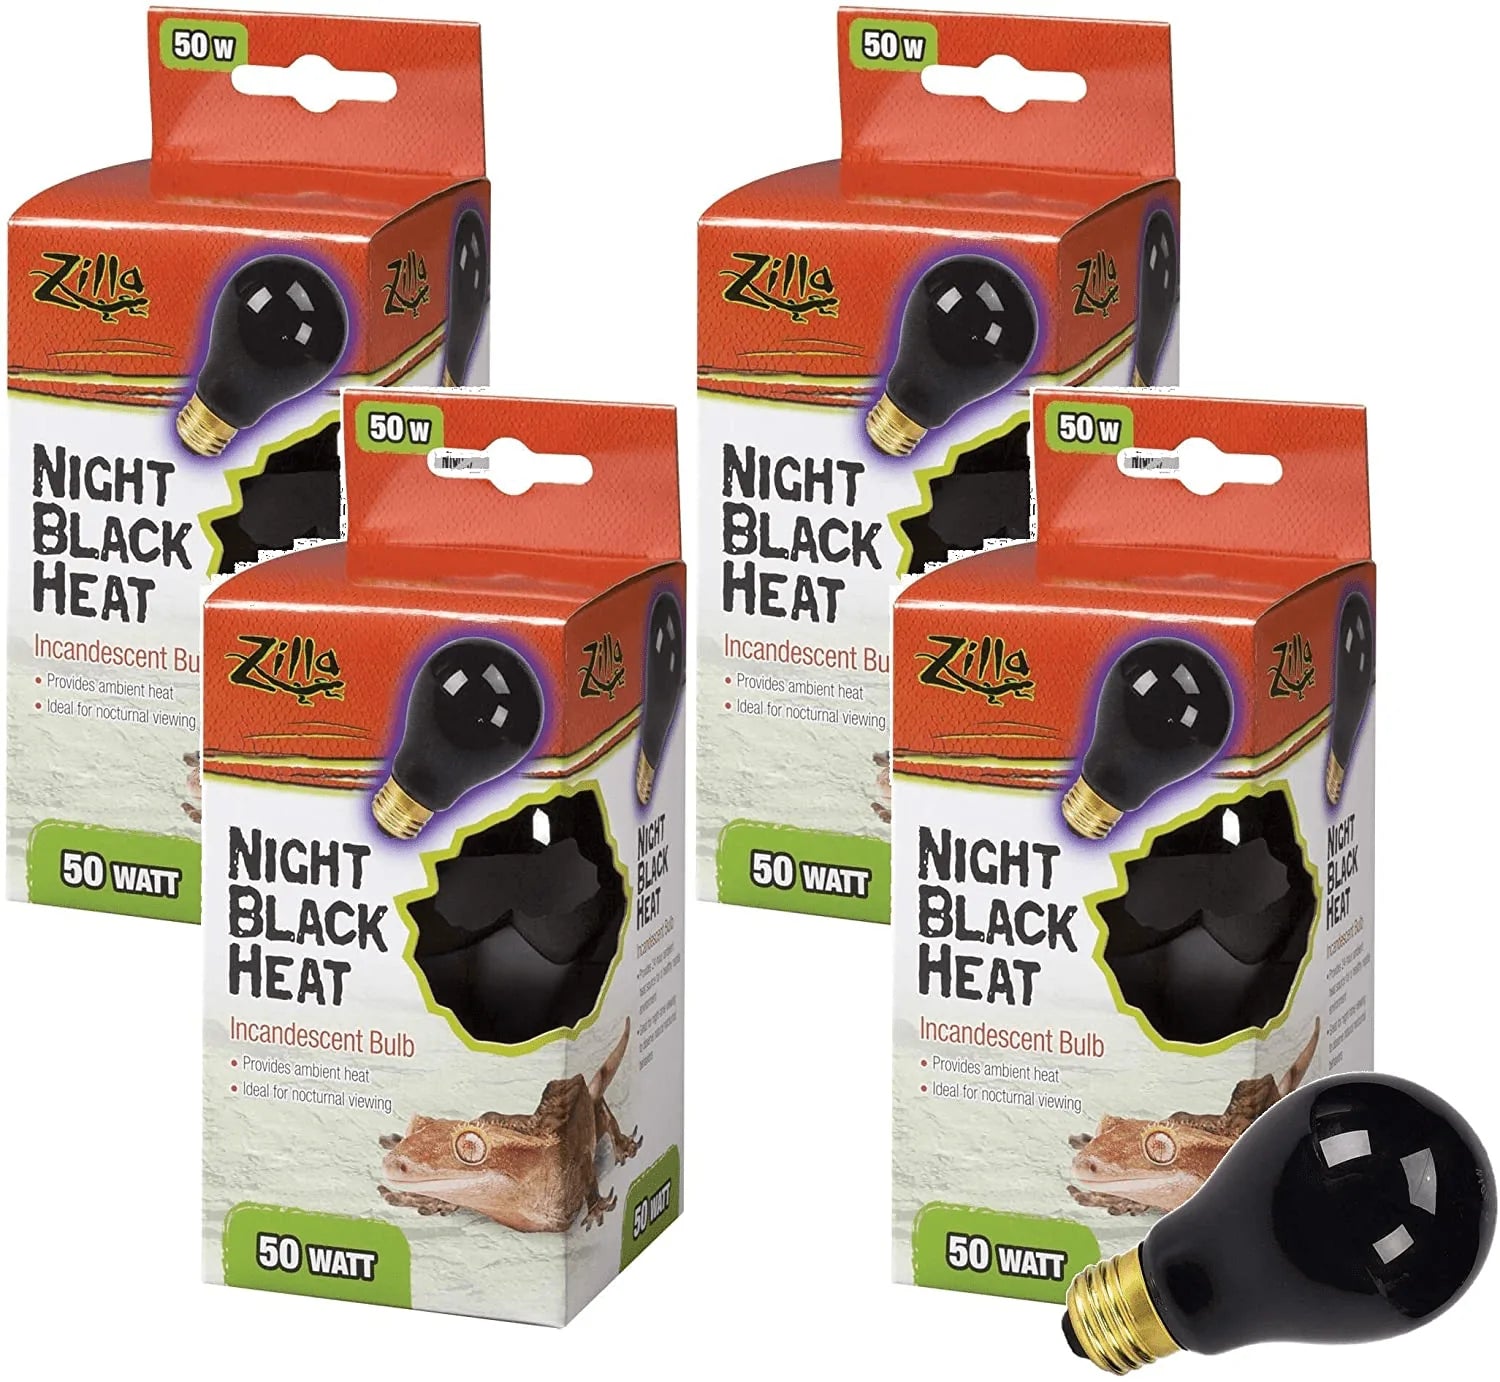 Zilla 4 Pack of Reptile Terrarium Heat Lamp Incandescent Bulbs, Night Black, 50W